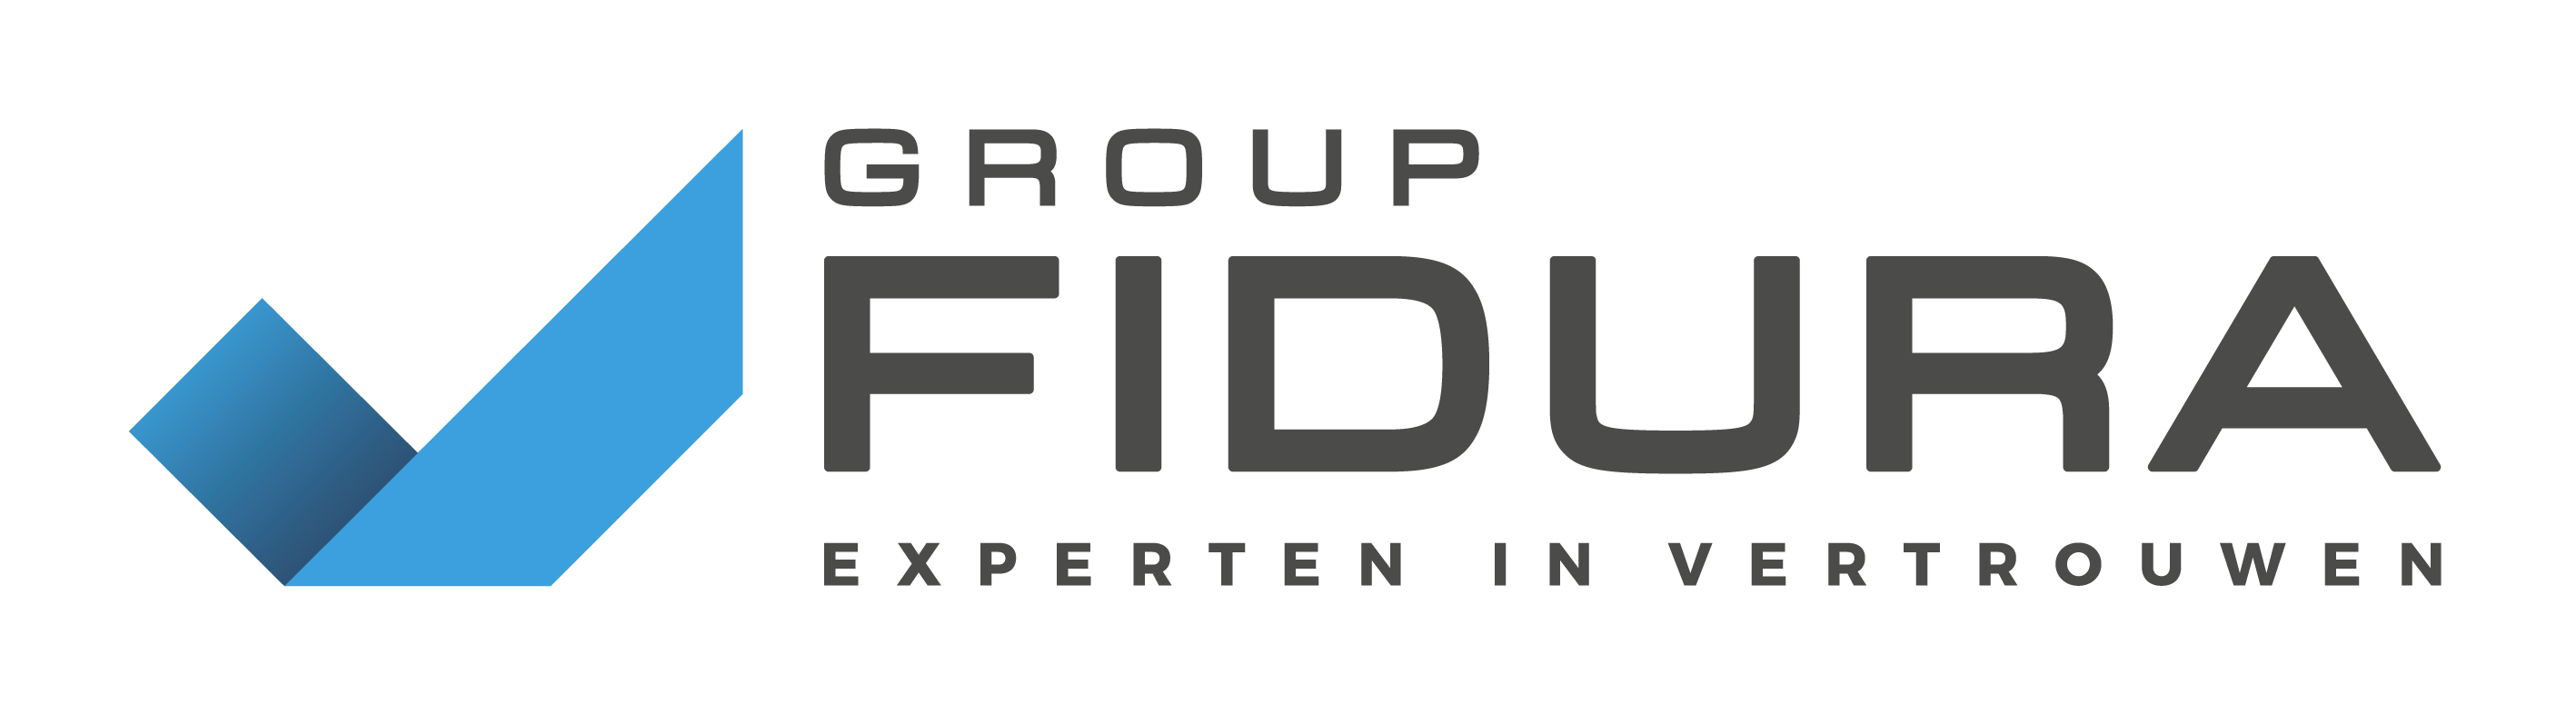 Group Fidura